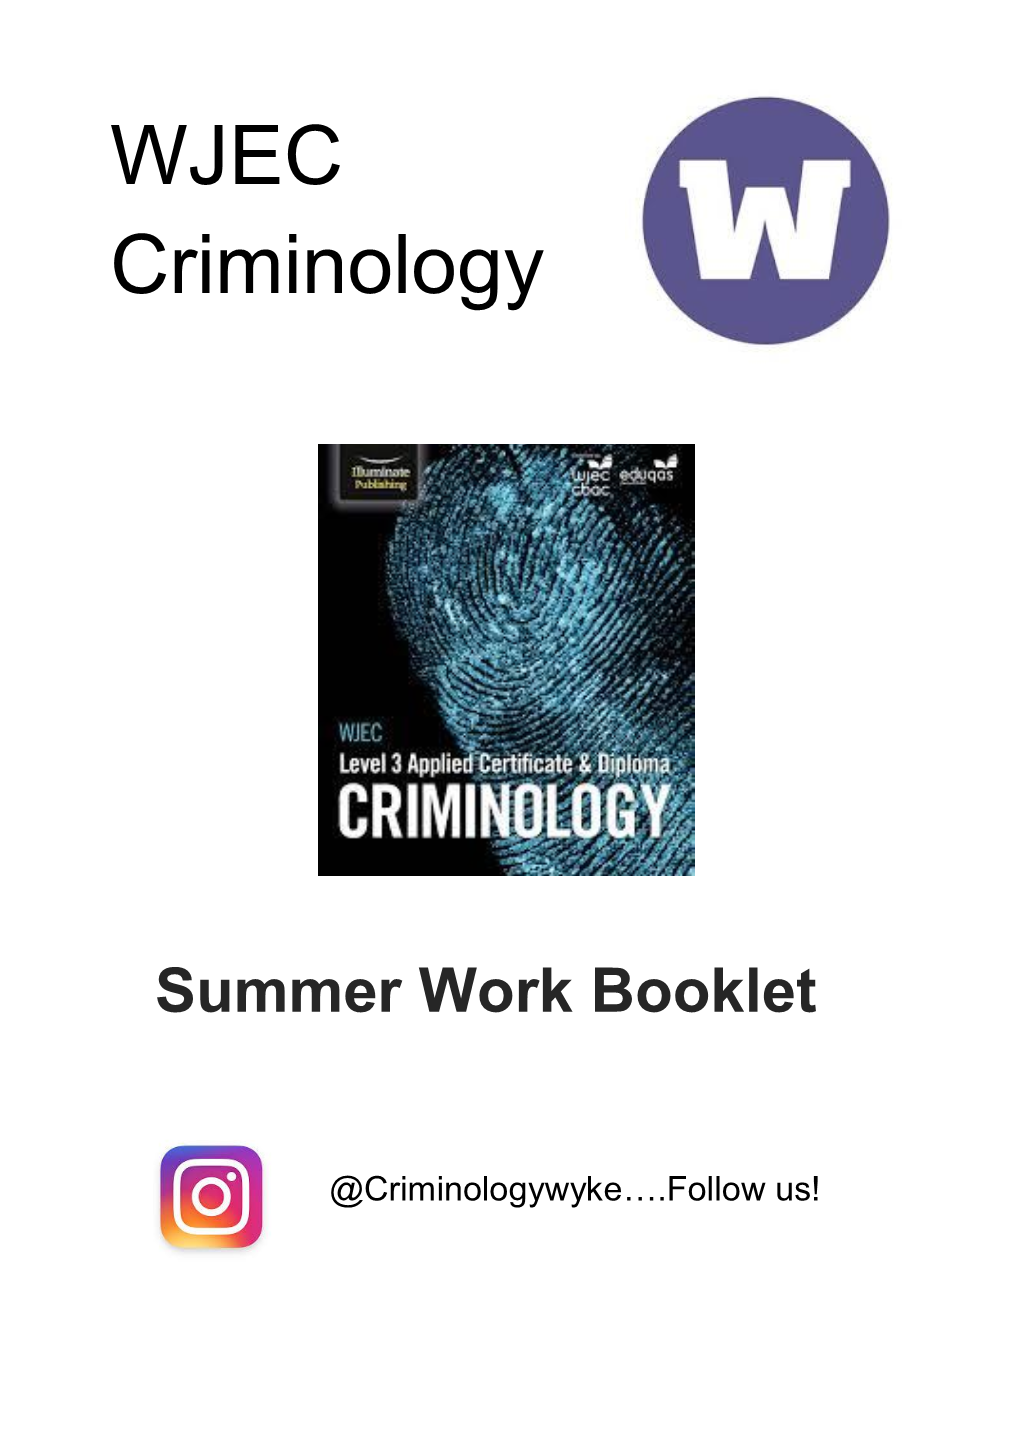 WJEC Criminology